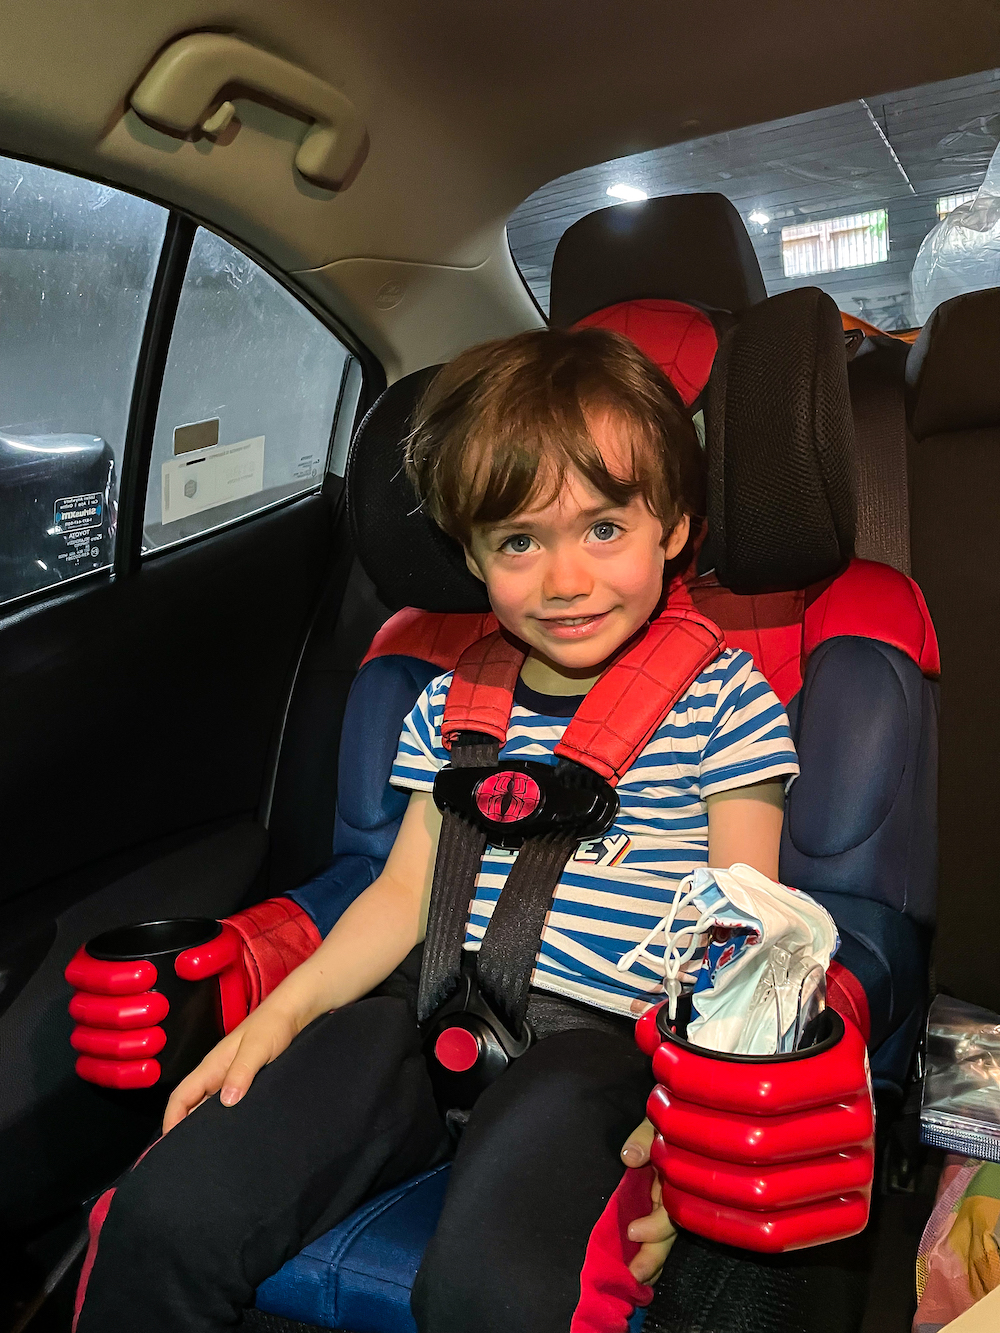 kidsembrace spider man car seat 